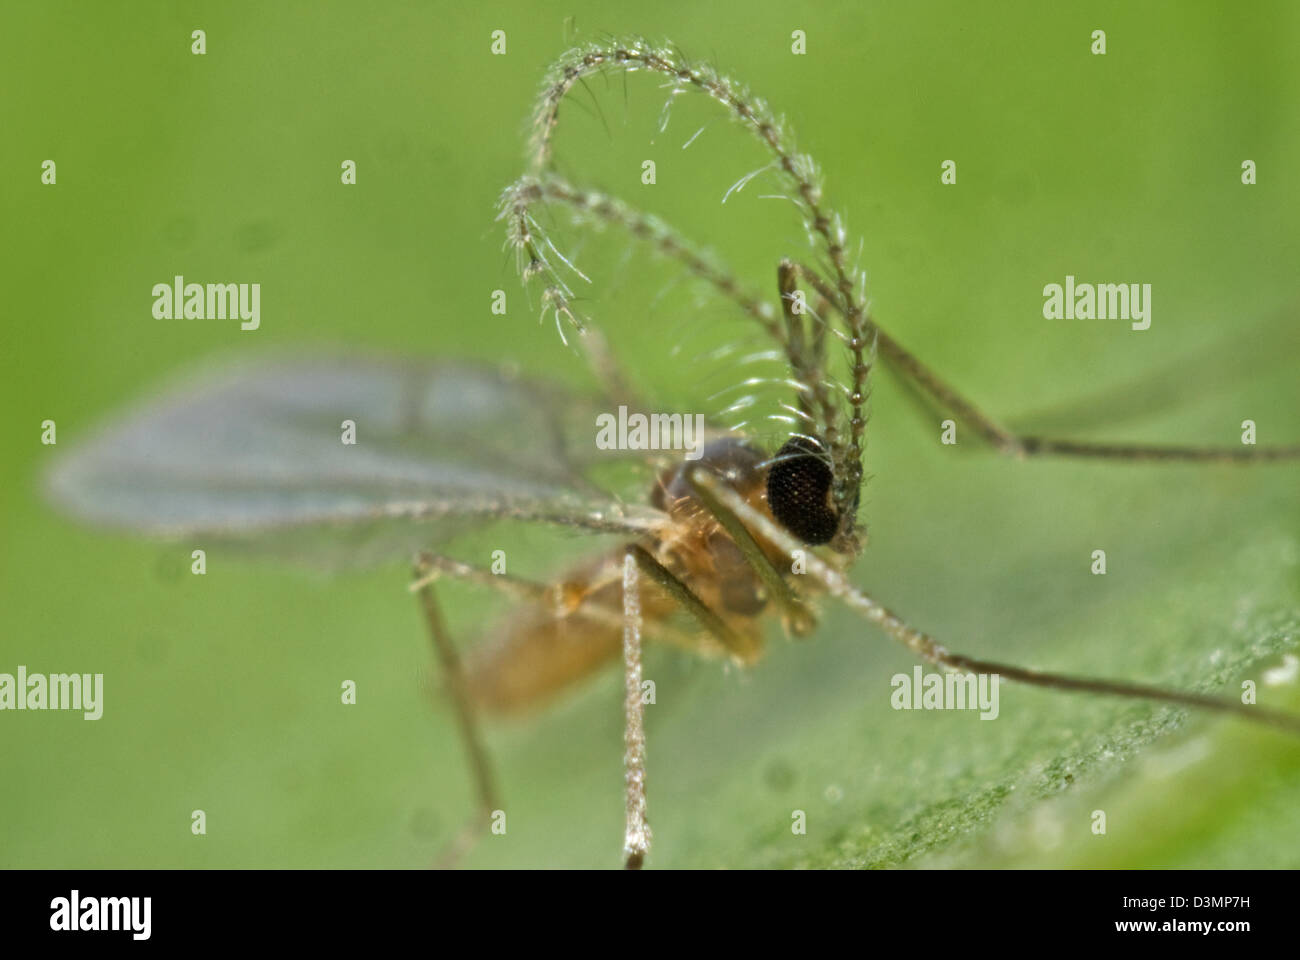 Male predatory midge, Aphidoletes aphidimyza, with elaborate antennae Stock Photo